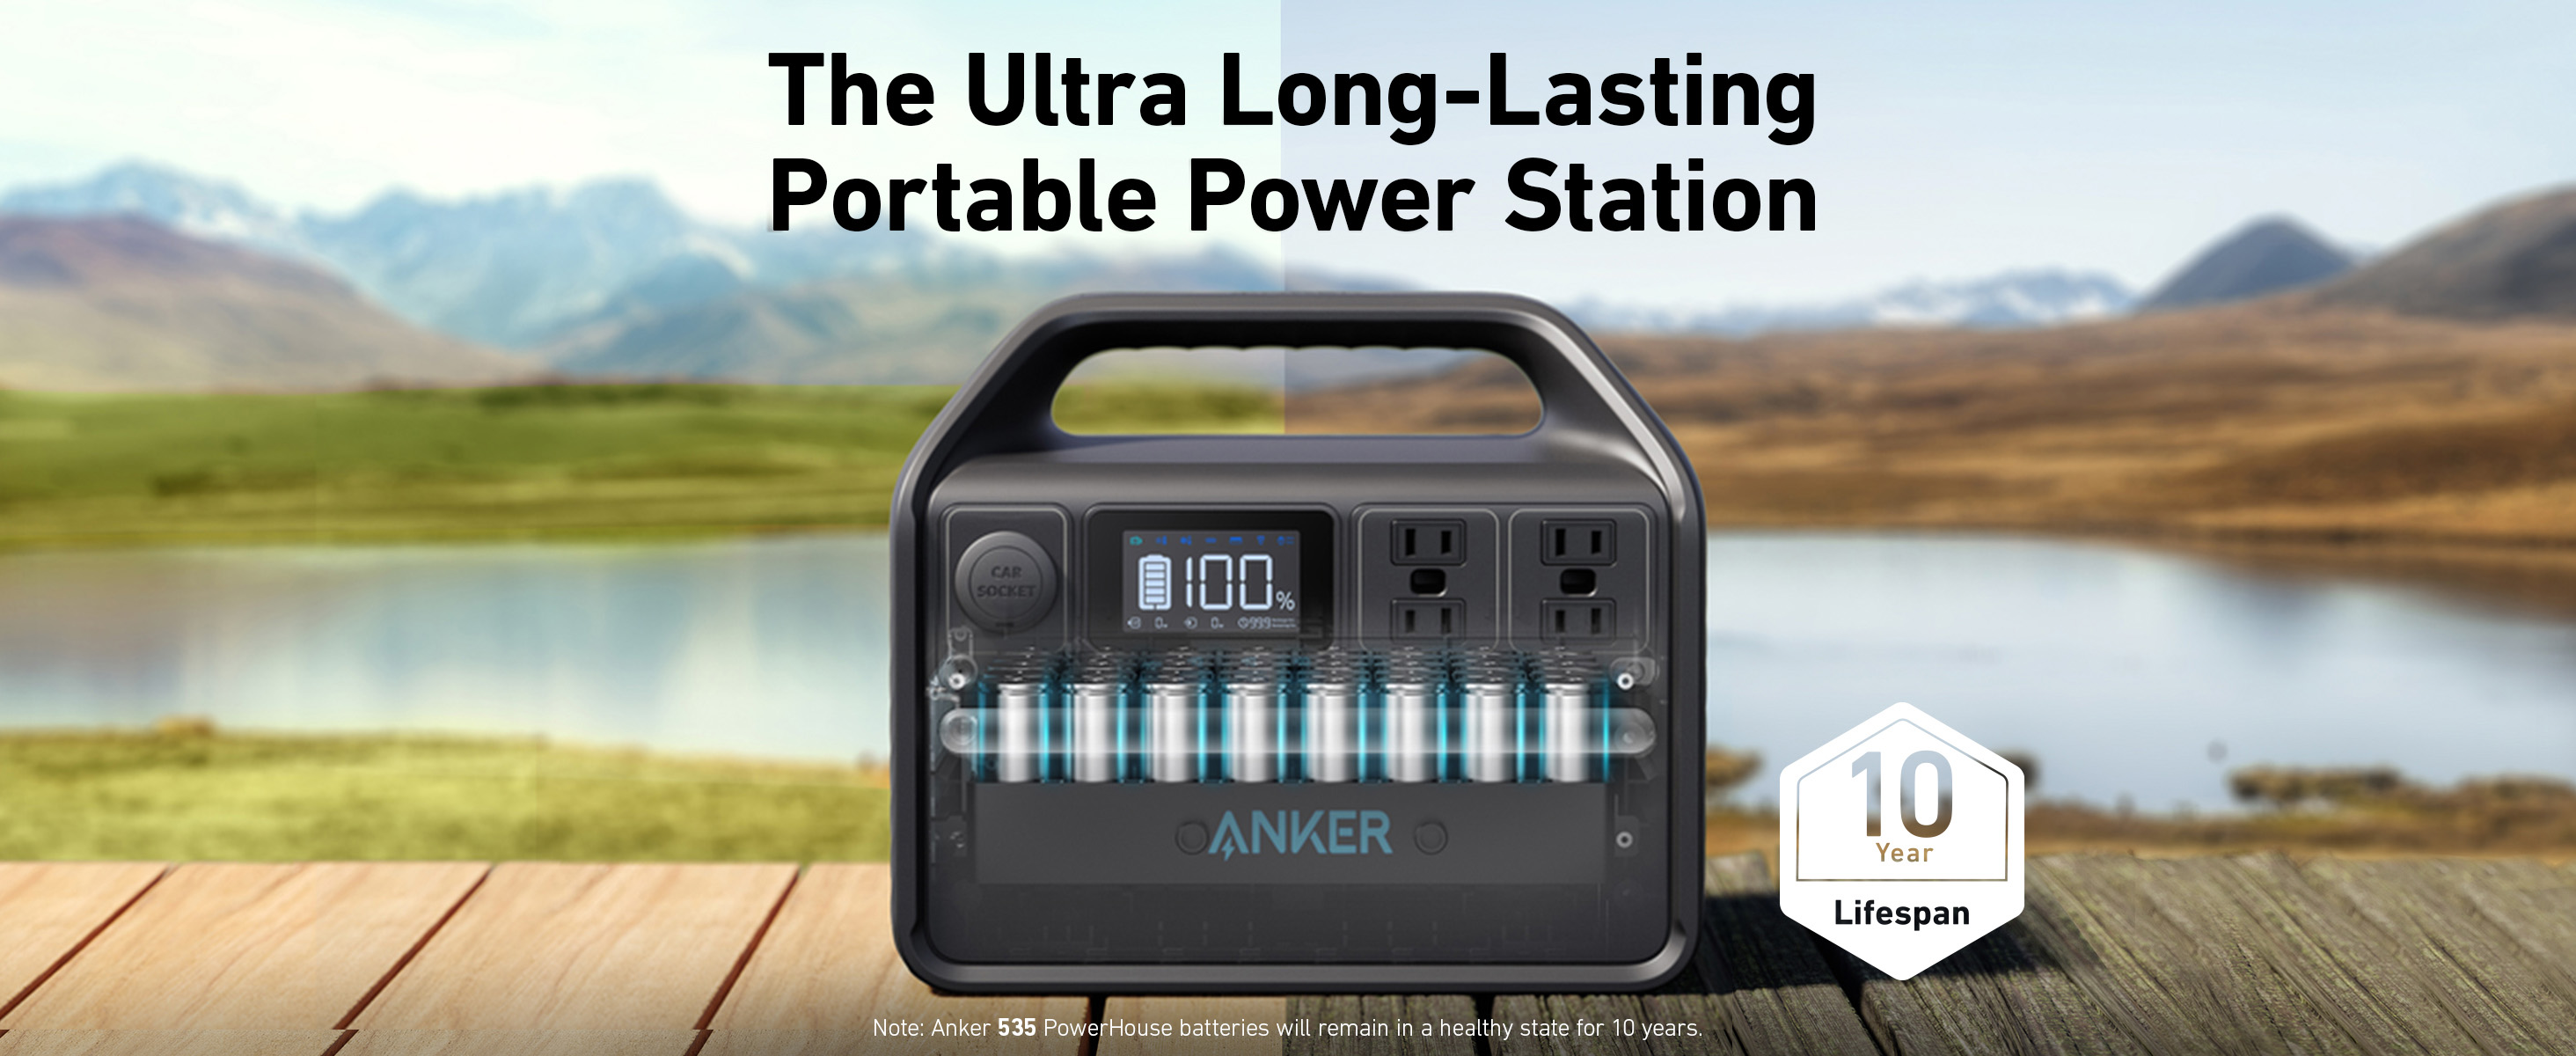 Anker powerhouse 535 portable power station 5 year warranty 10 year lifespan